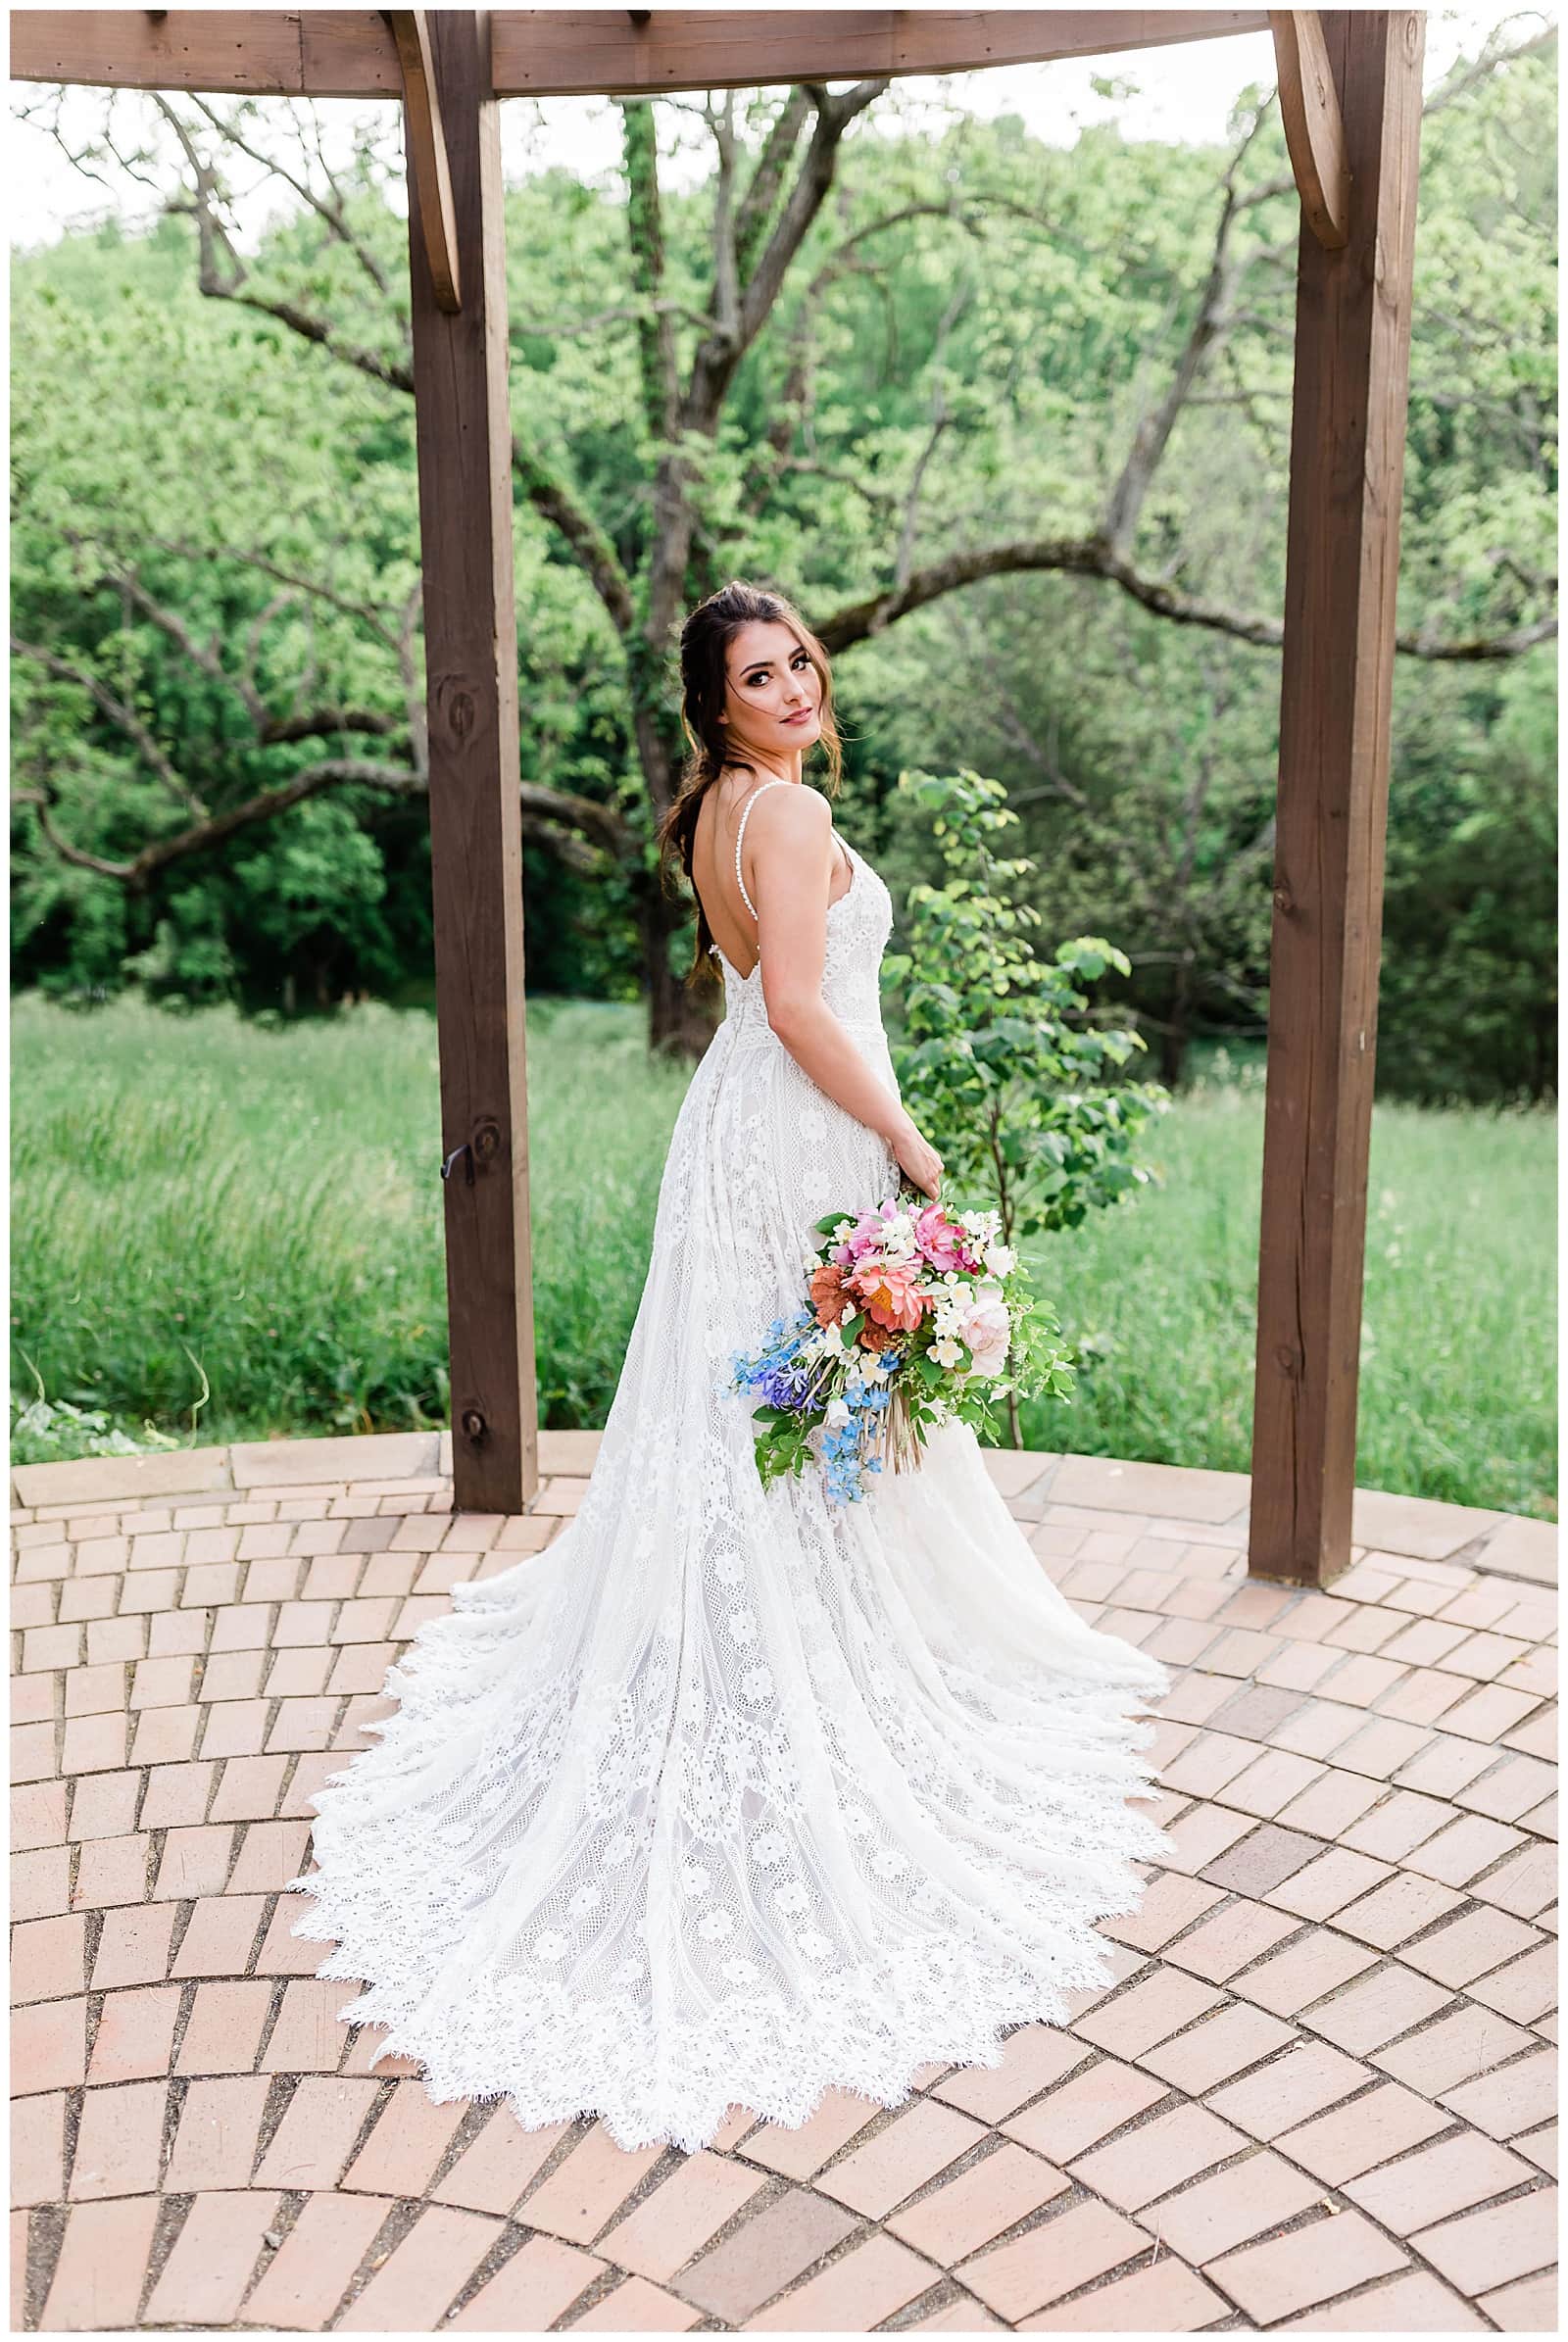 Danielle-Defayette-Photography-The-Side-Porch-Wedding-Annies-Room-2020_0032.jpg